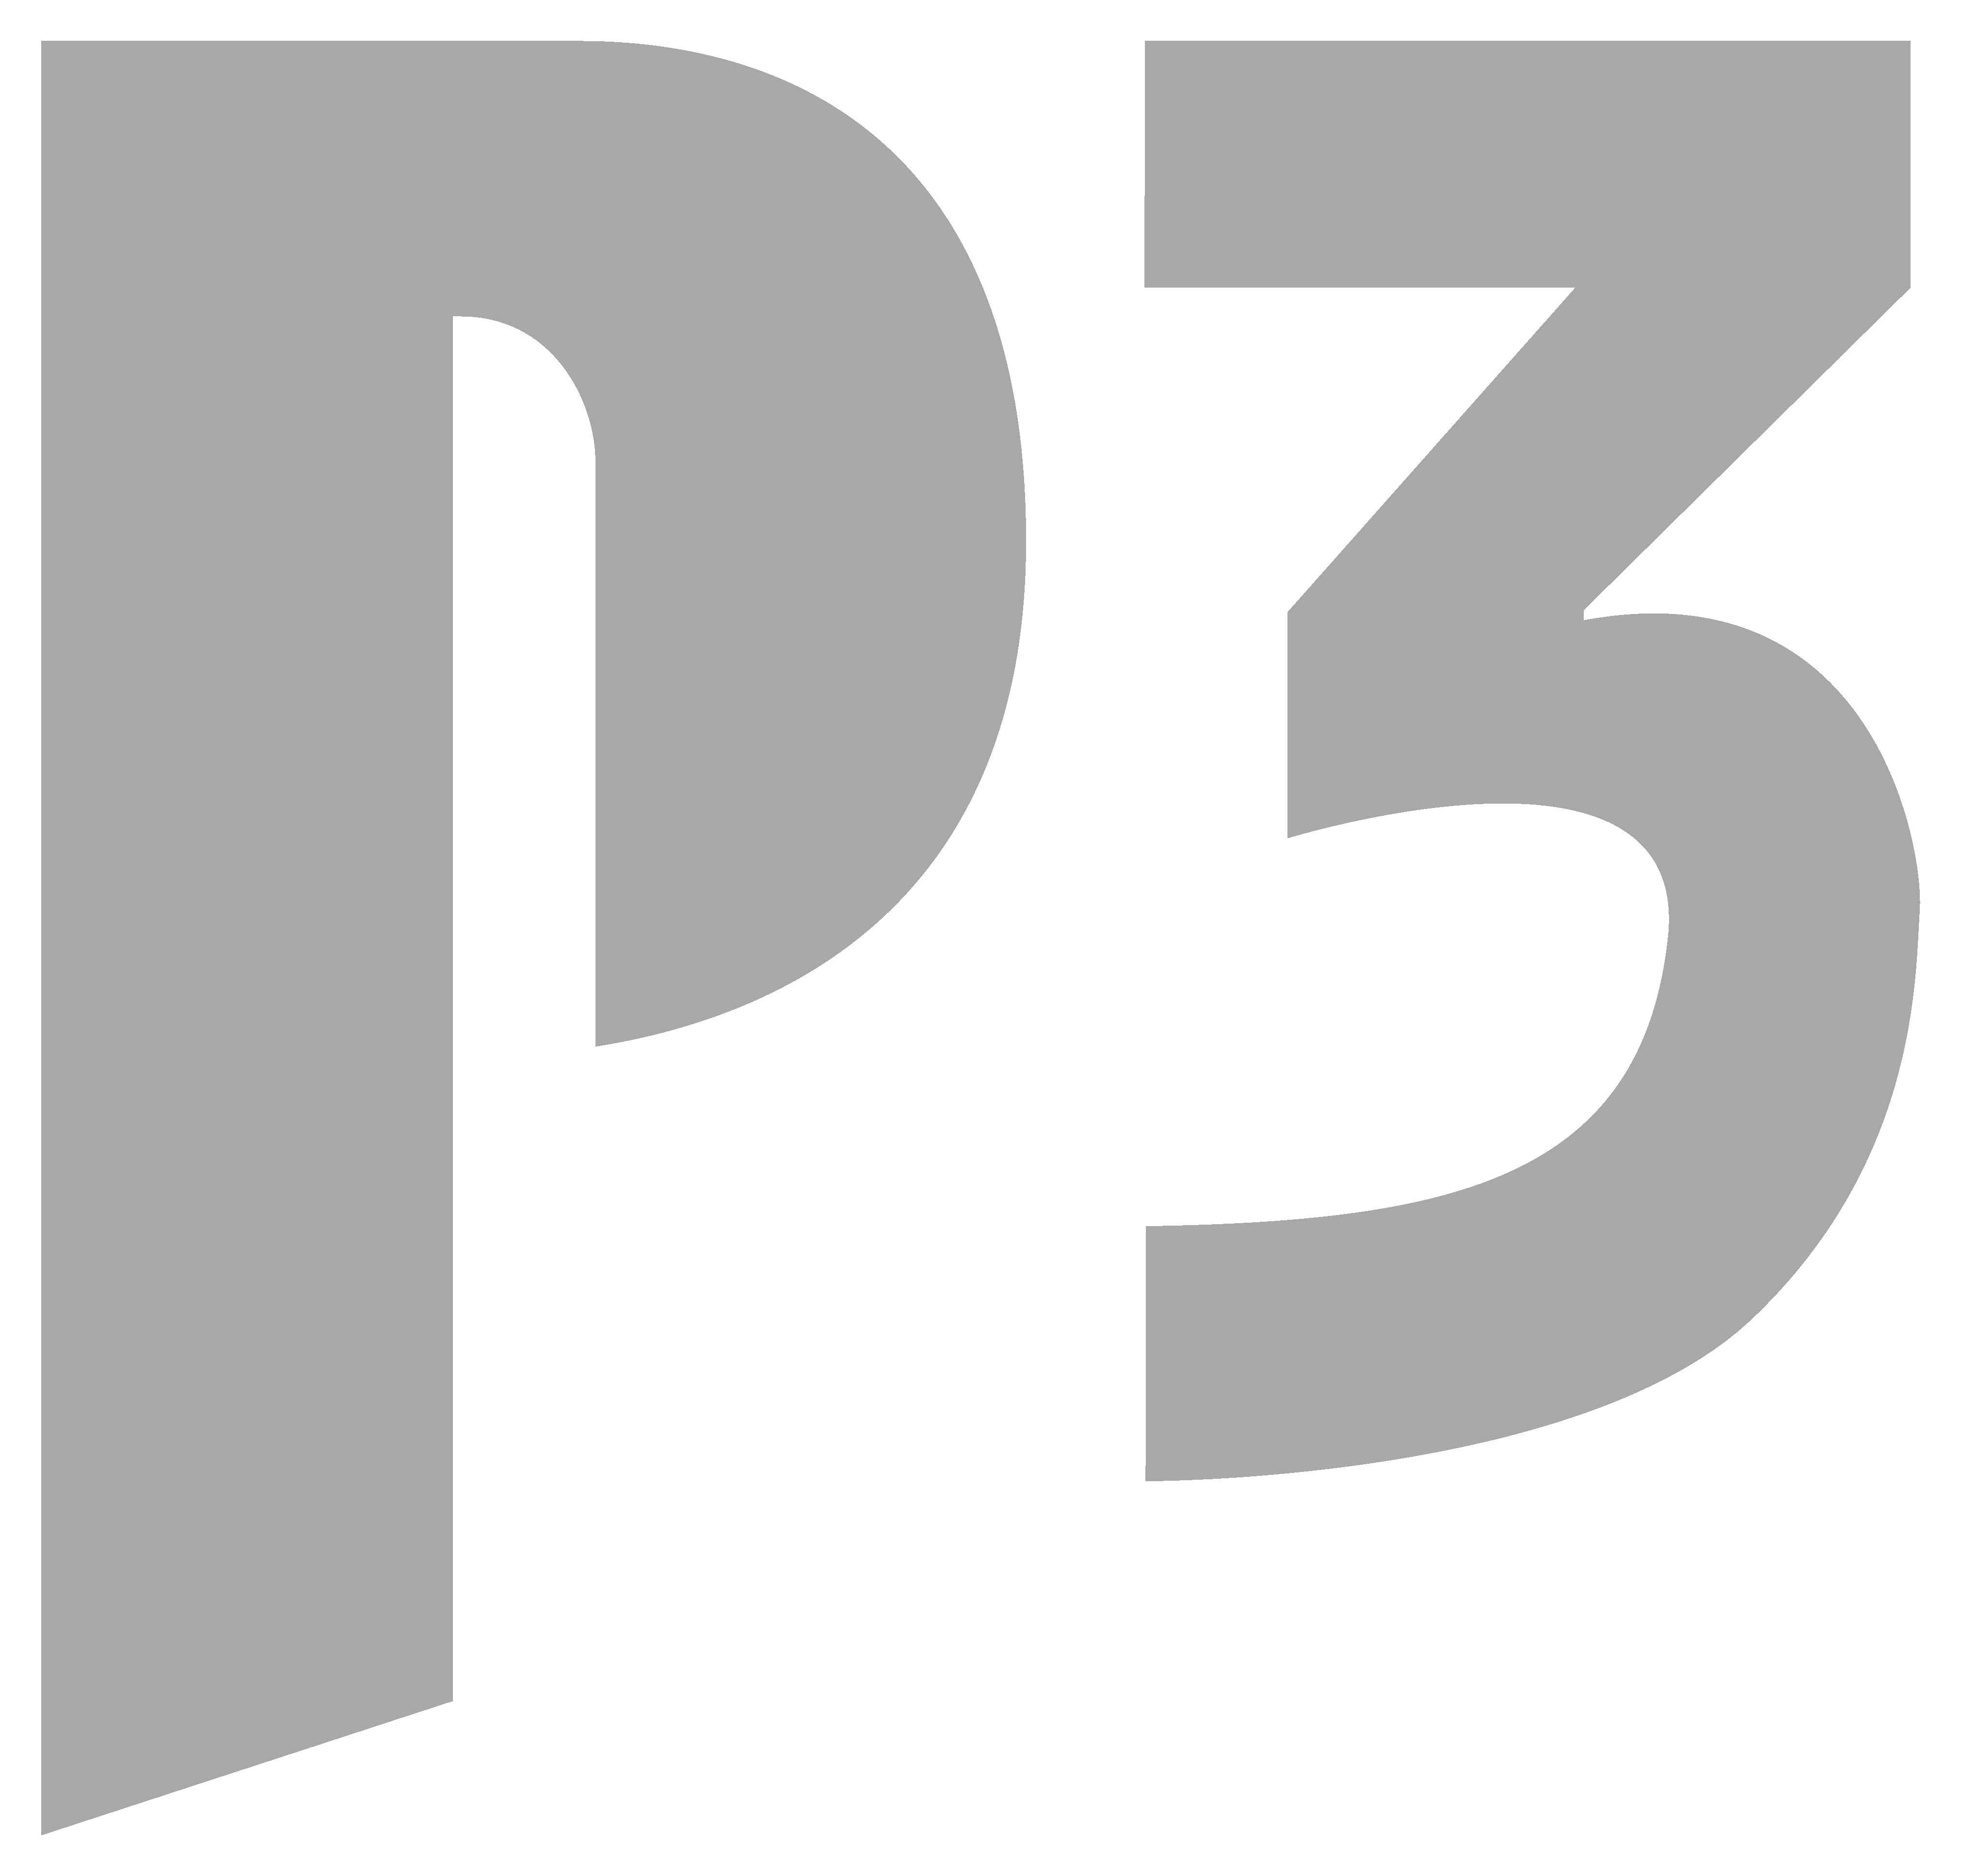 P3 Group Logo